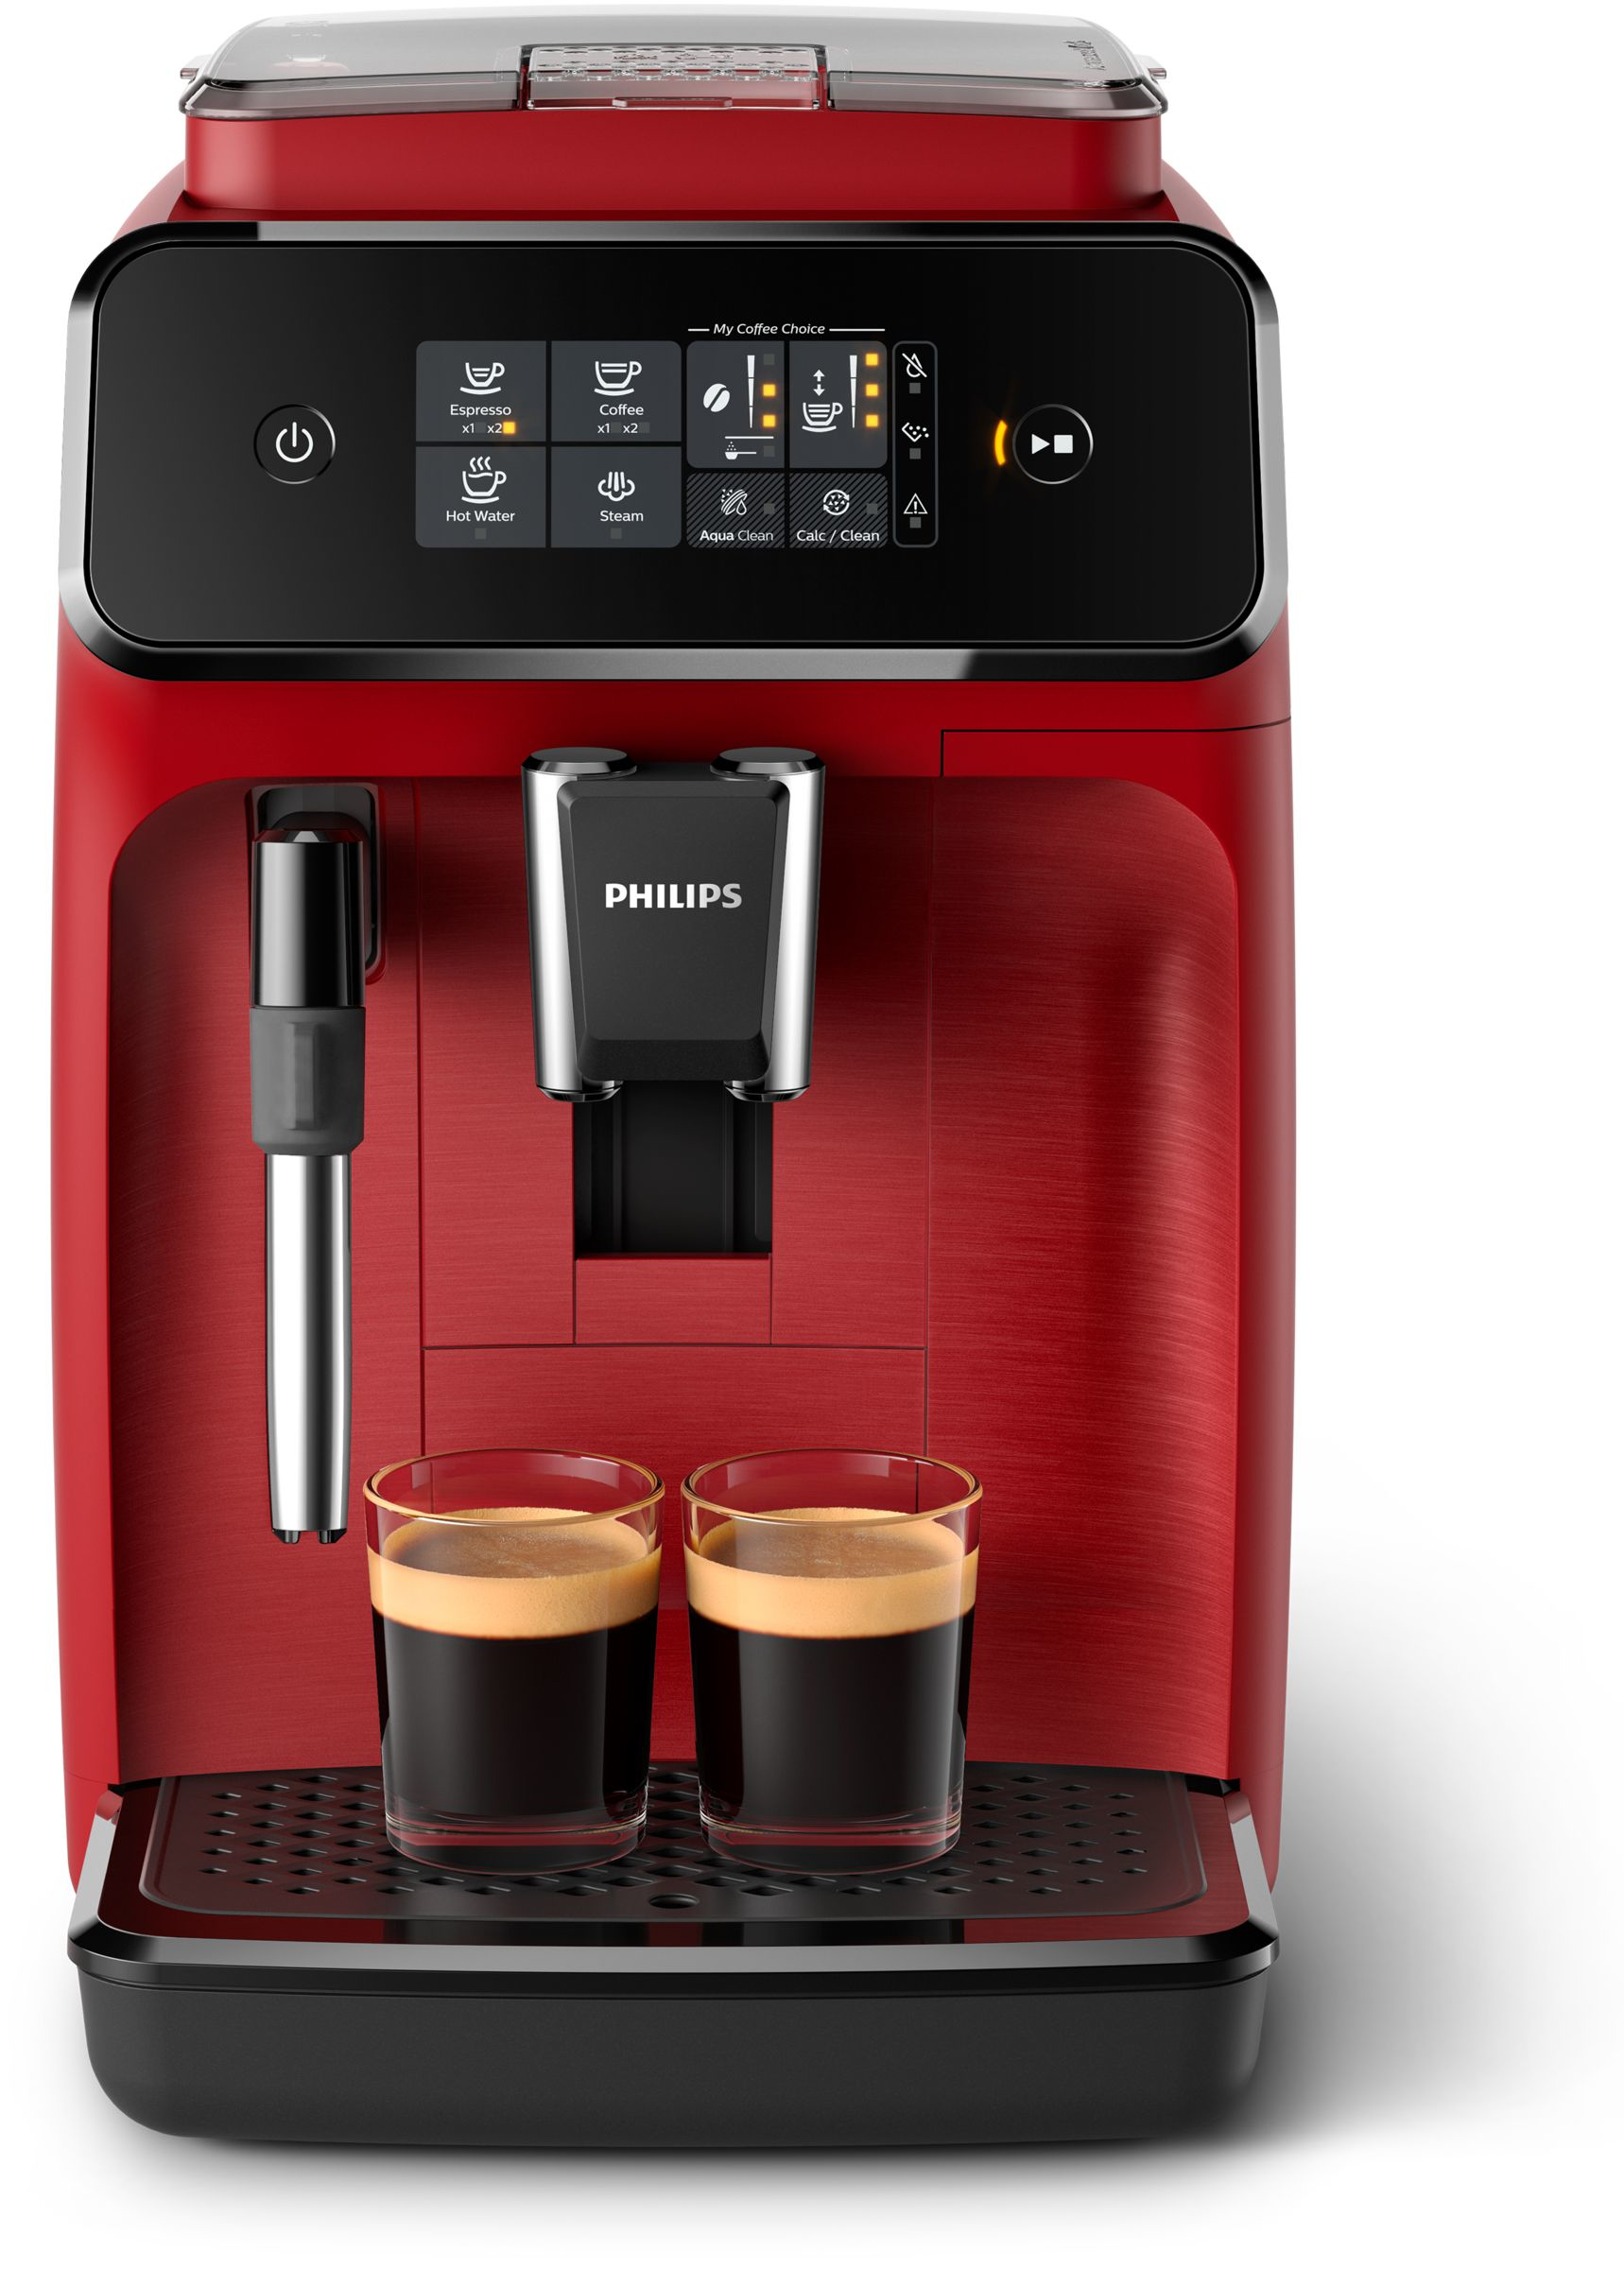 Philips 1200 series EP1222/00 coffee maker